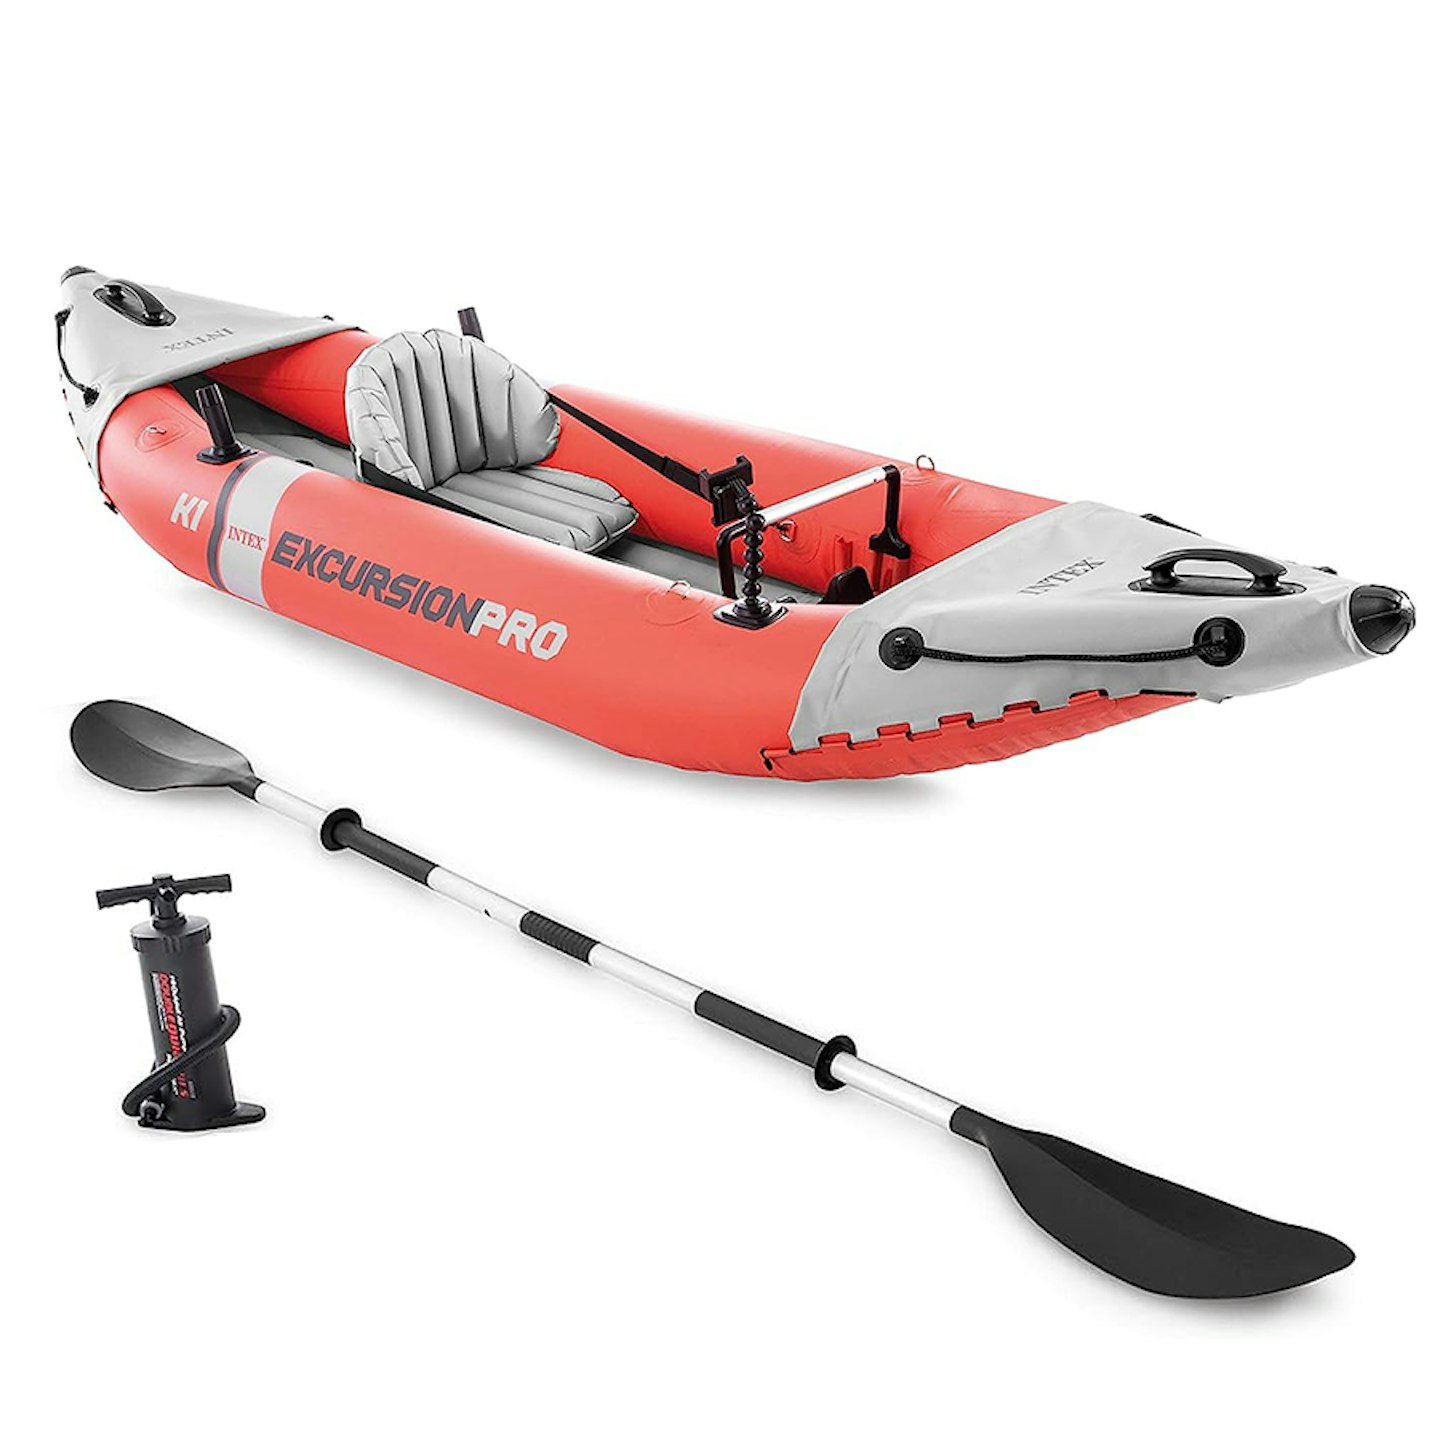 Intex Excursion Pro Kayak Series one-person inflatable kayak